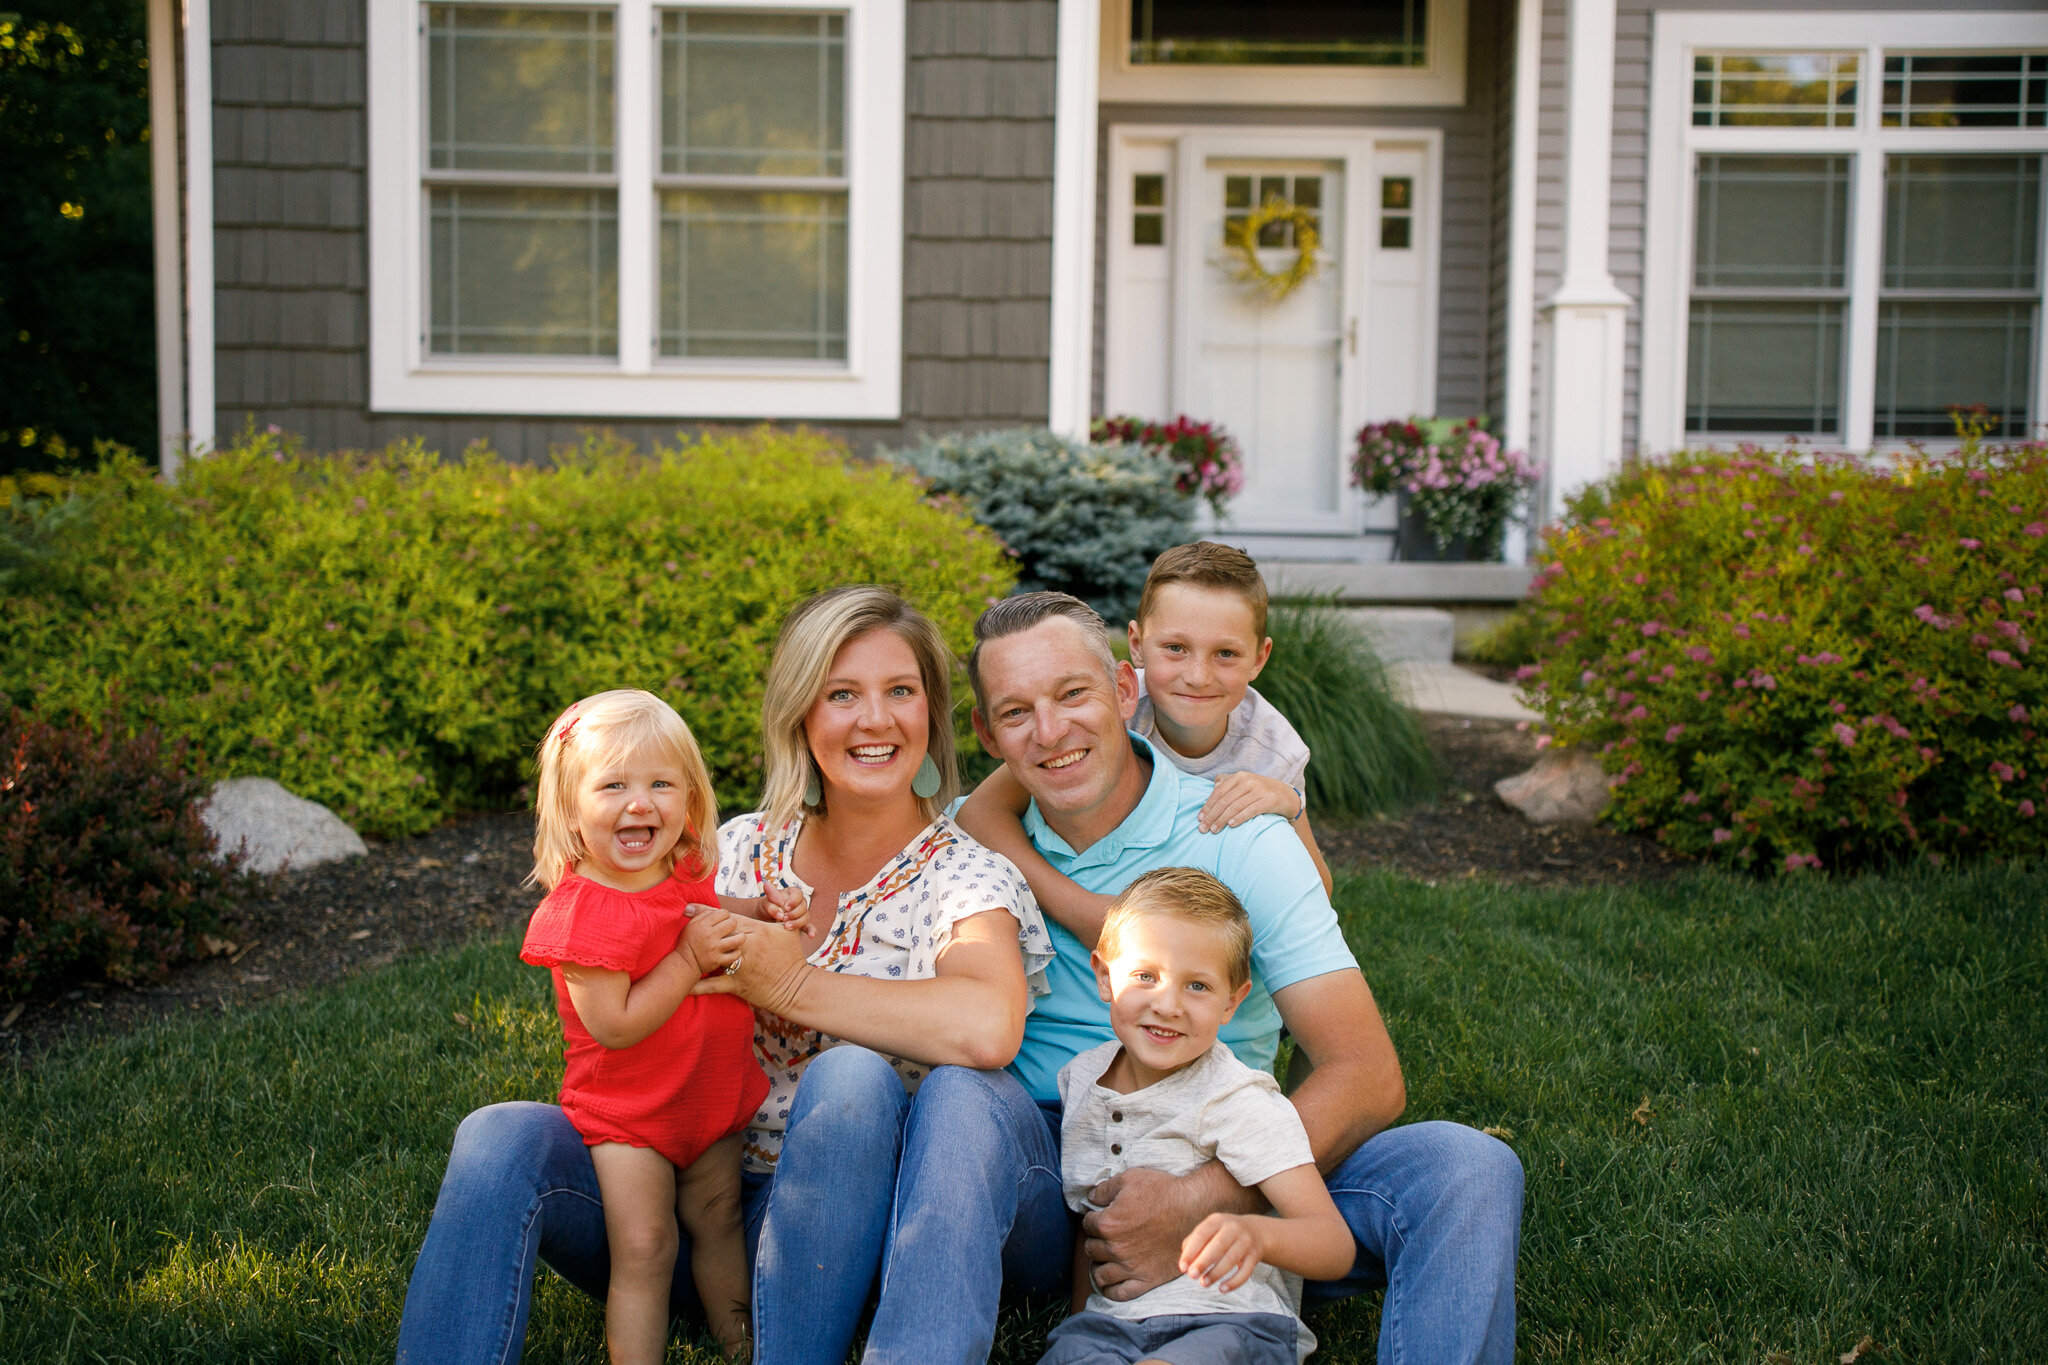 Clabuesch Family - Grand Rapids Family Photographer - Grand Rapids Lifestyle Photographer - Jessica Darling - J Darling Photo011.jpg